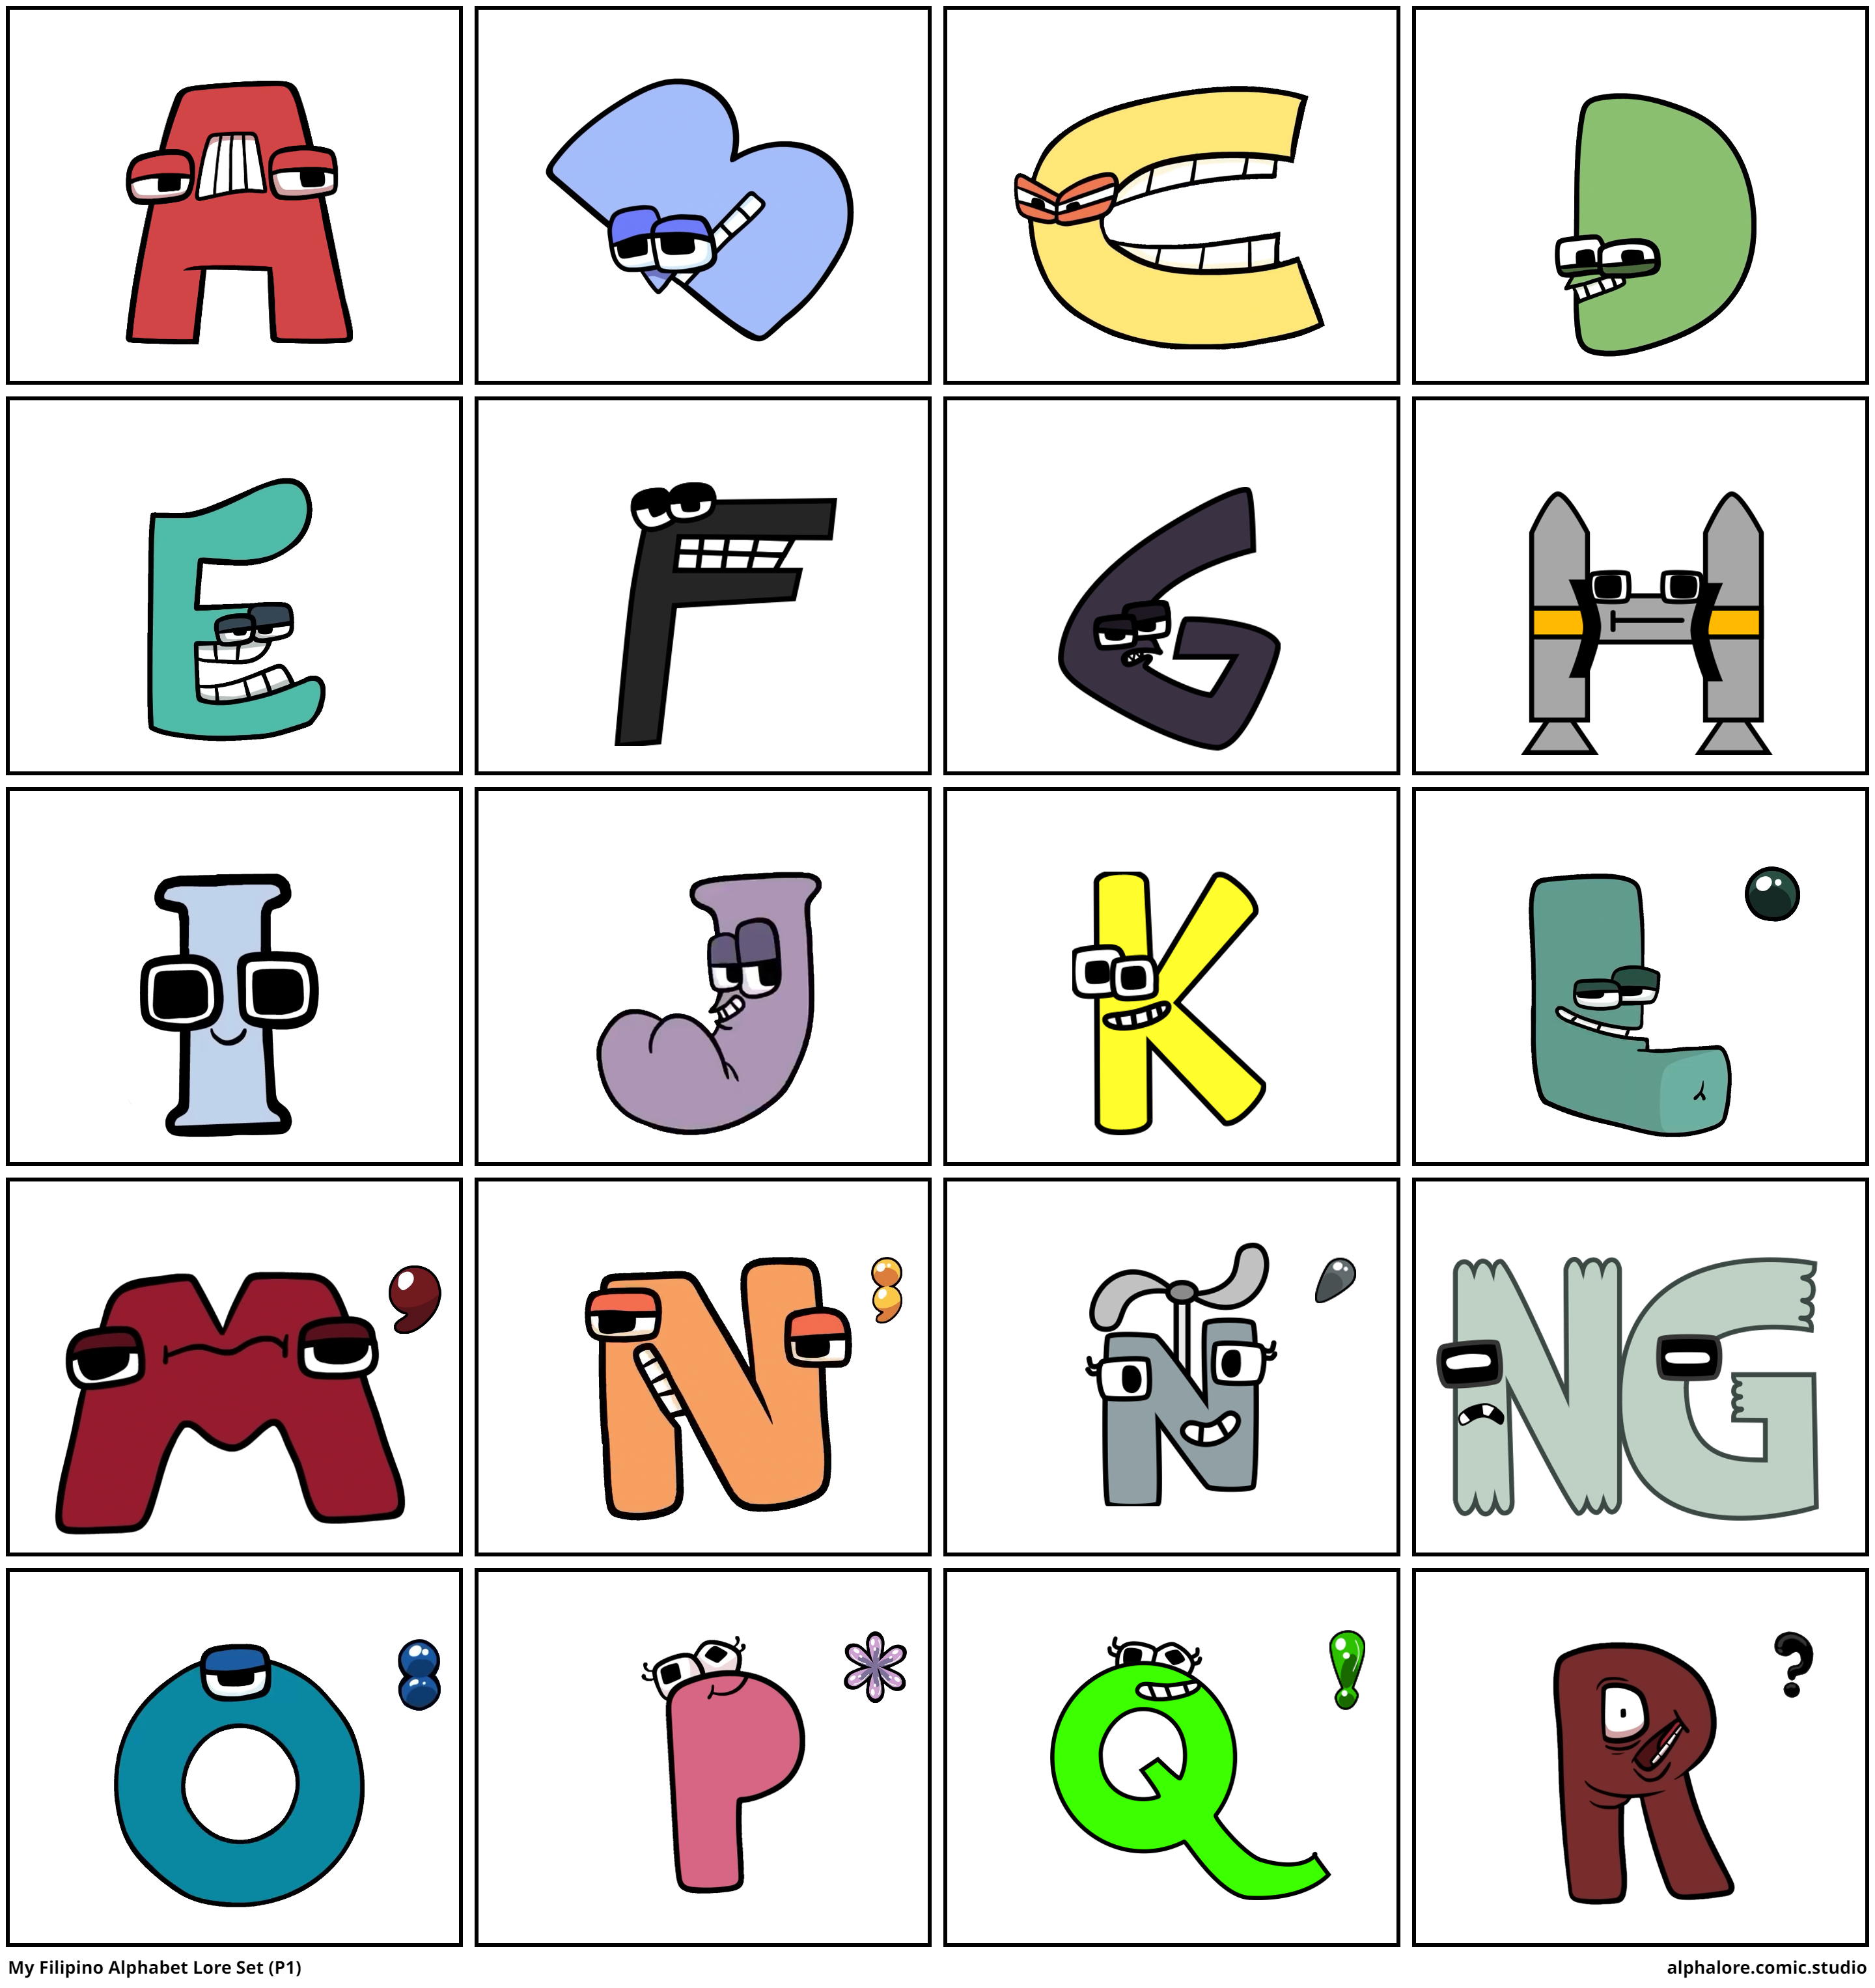 My Filipino Alphabet Lore Set (P1)